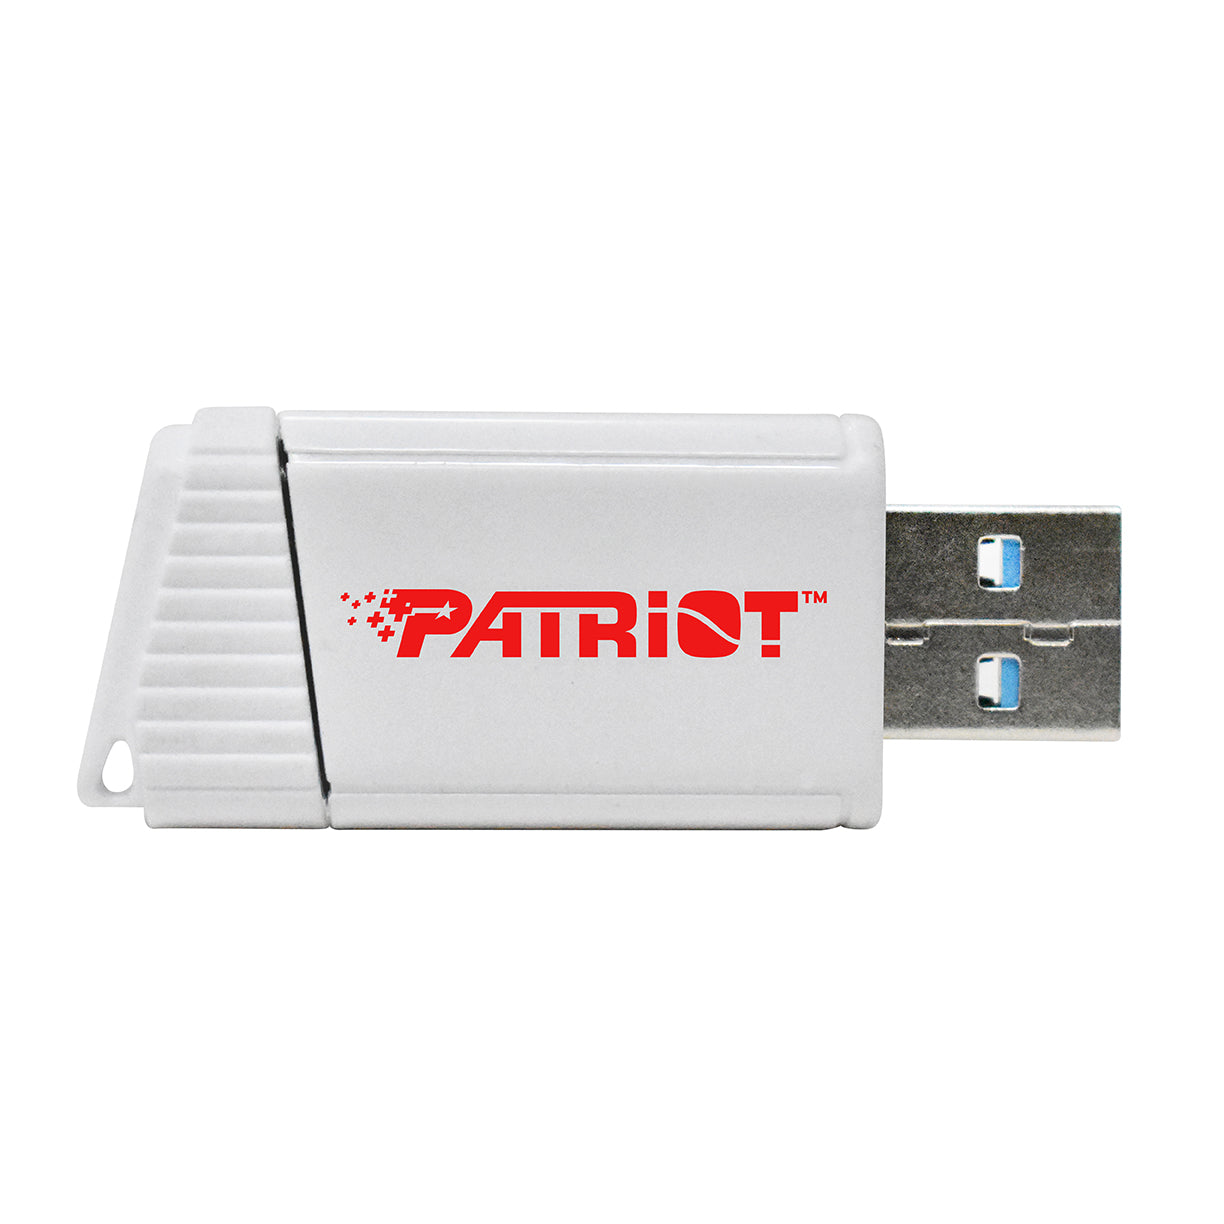 Patriot 250GB Supersonic Rage Prime USB 3.2 Gen 2 Type-A